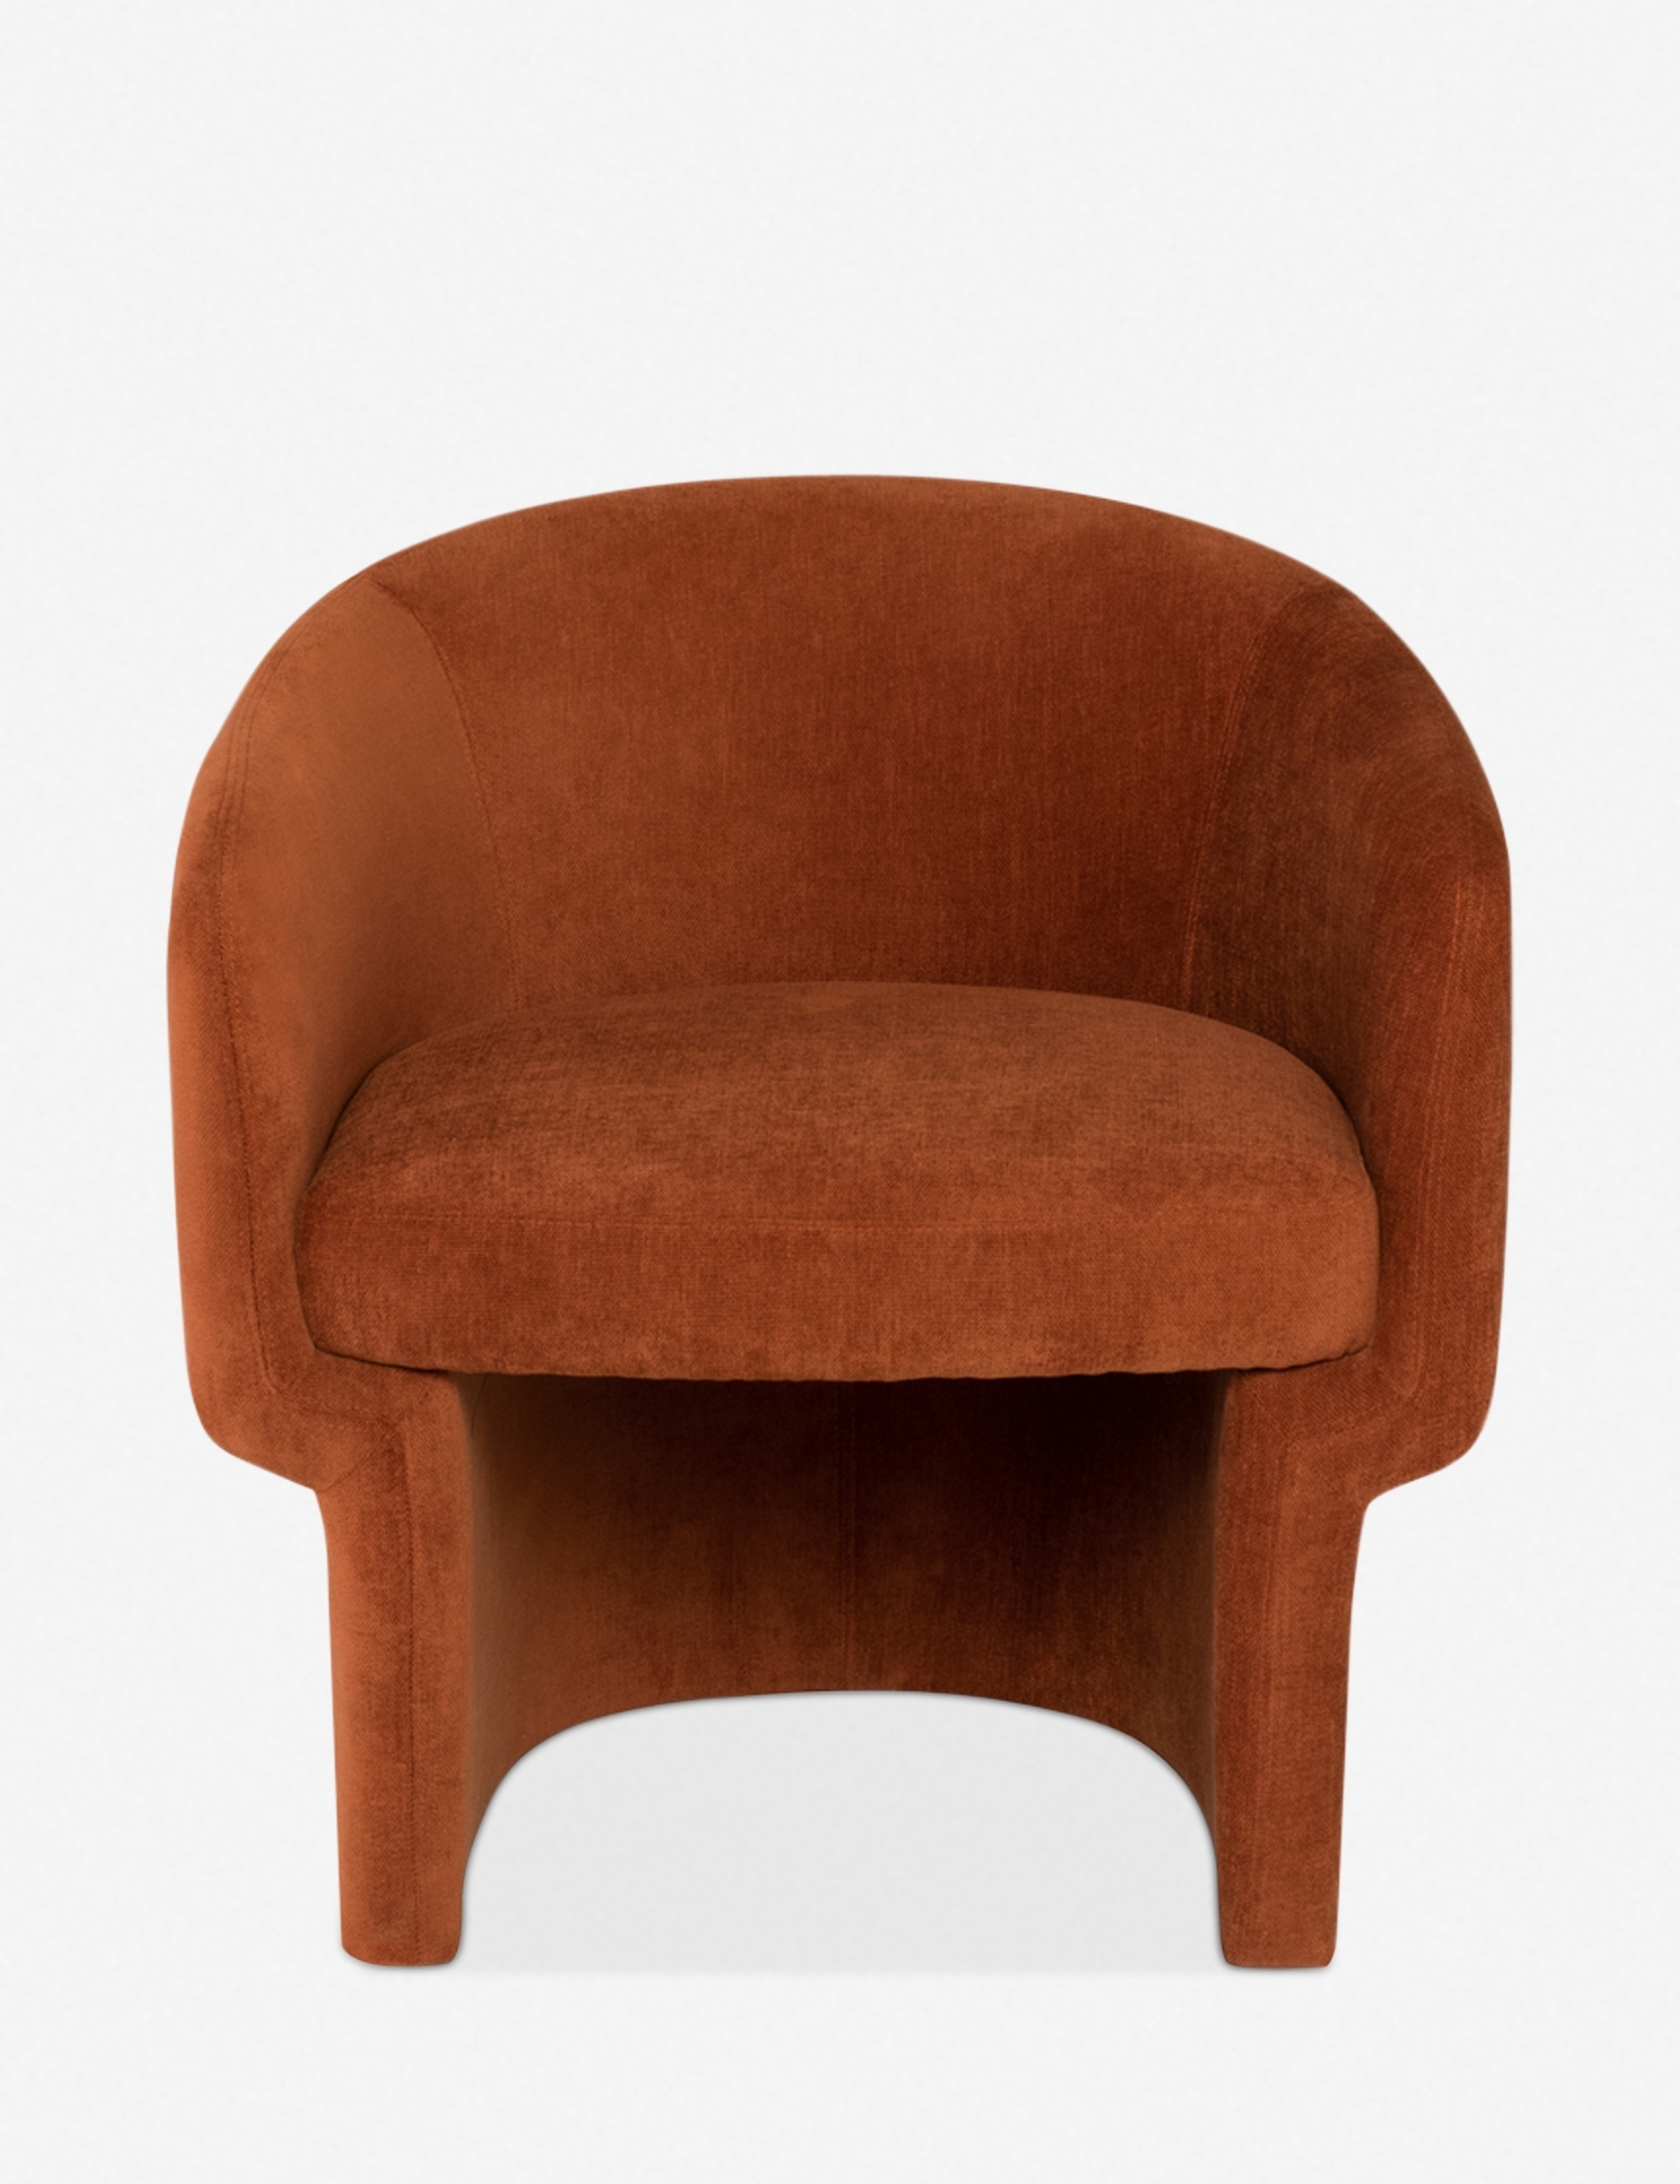 Pomona Occasional Chair, Terracotta - Image 0